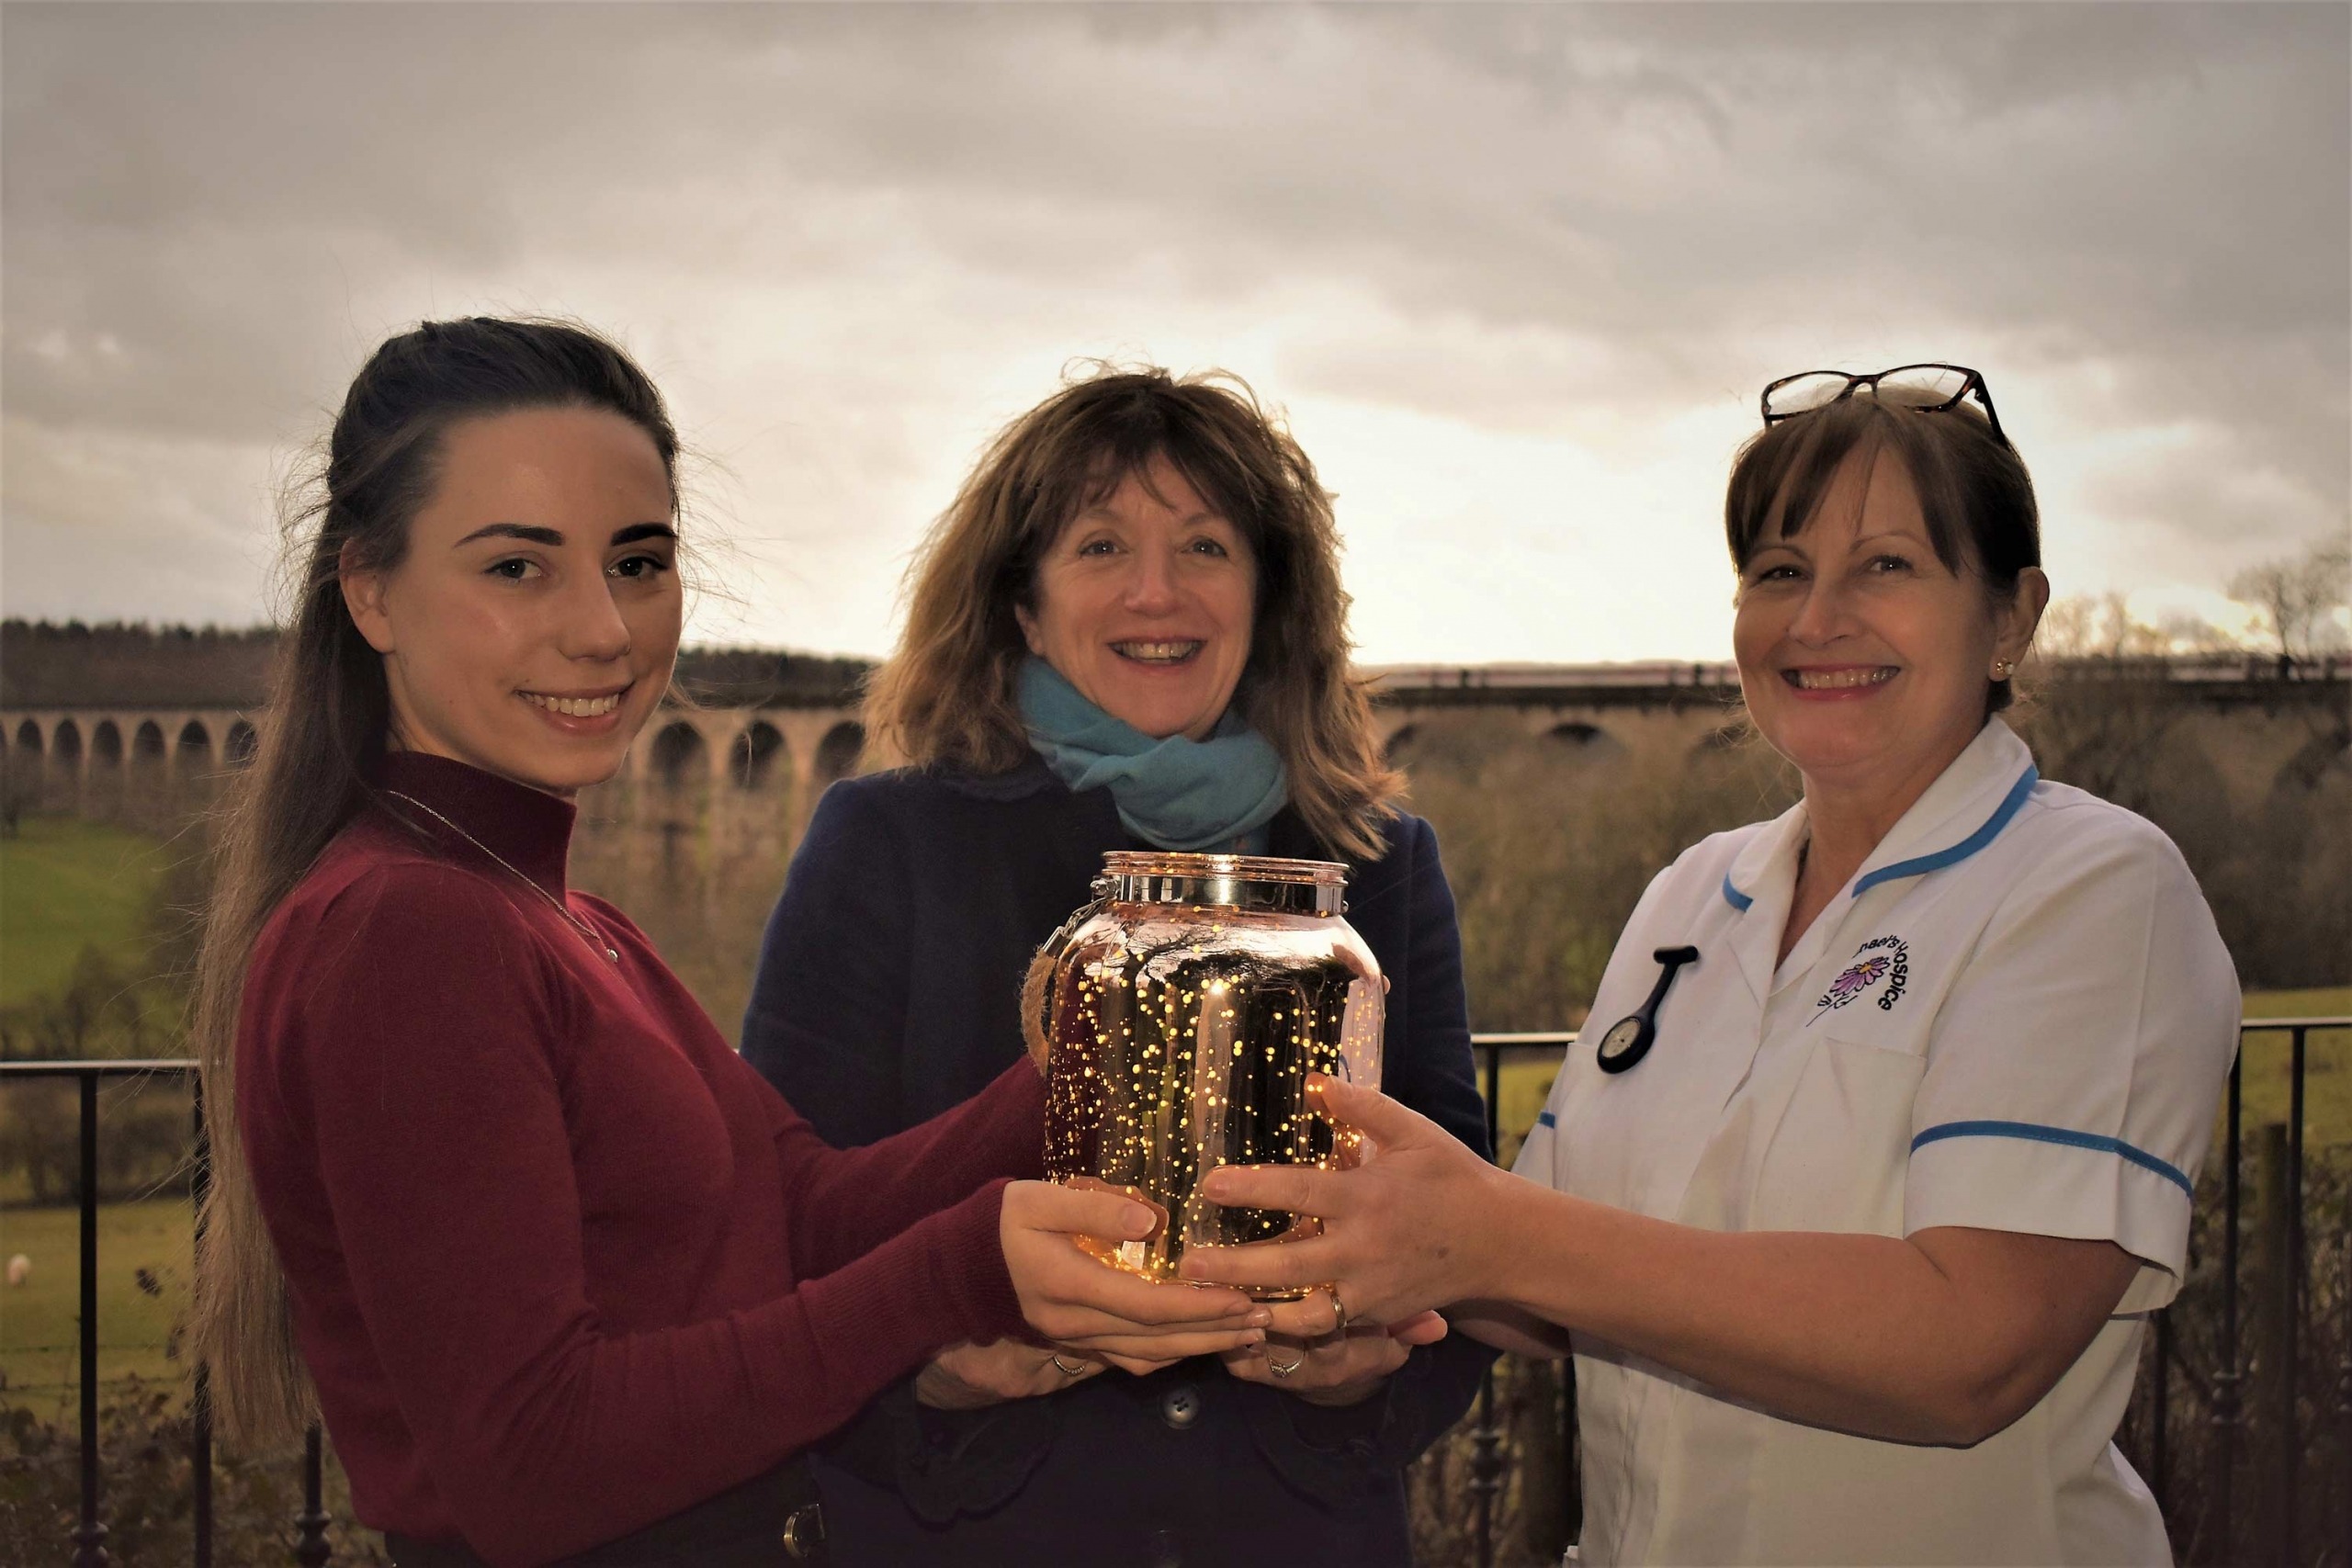 Saint Michael’s team members, holding the limited edition keepsake lantern, in the grounds of Saint Michael’s Hospice, Harrogate